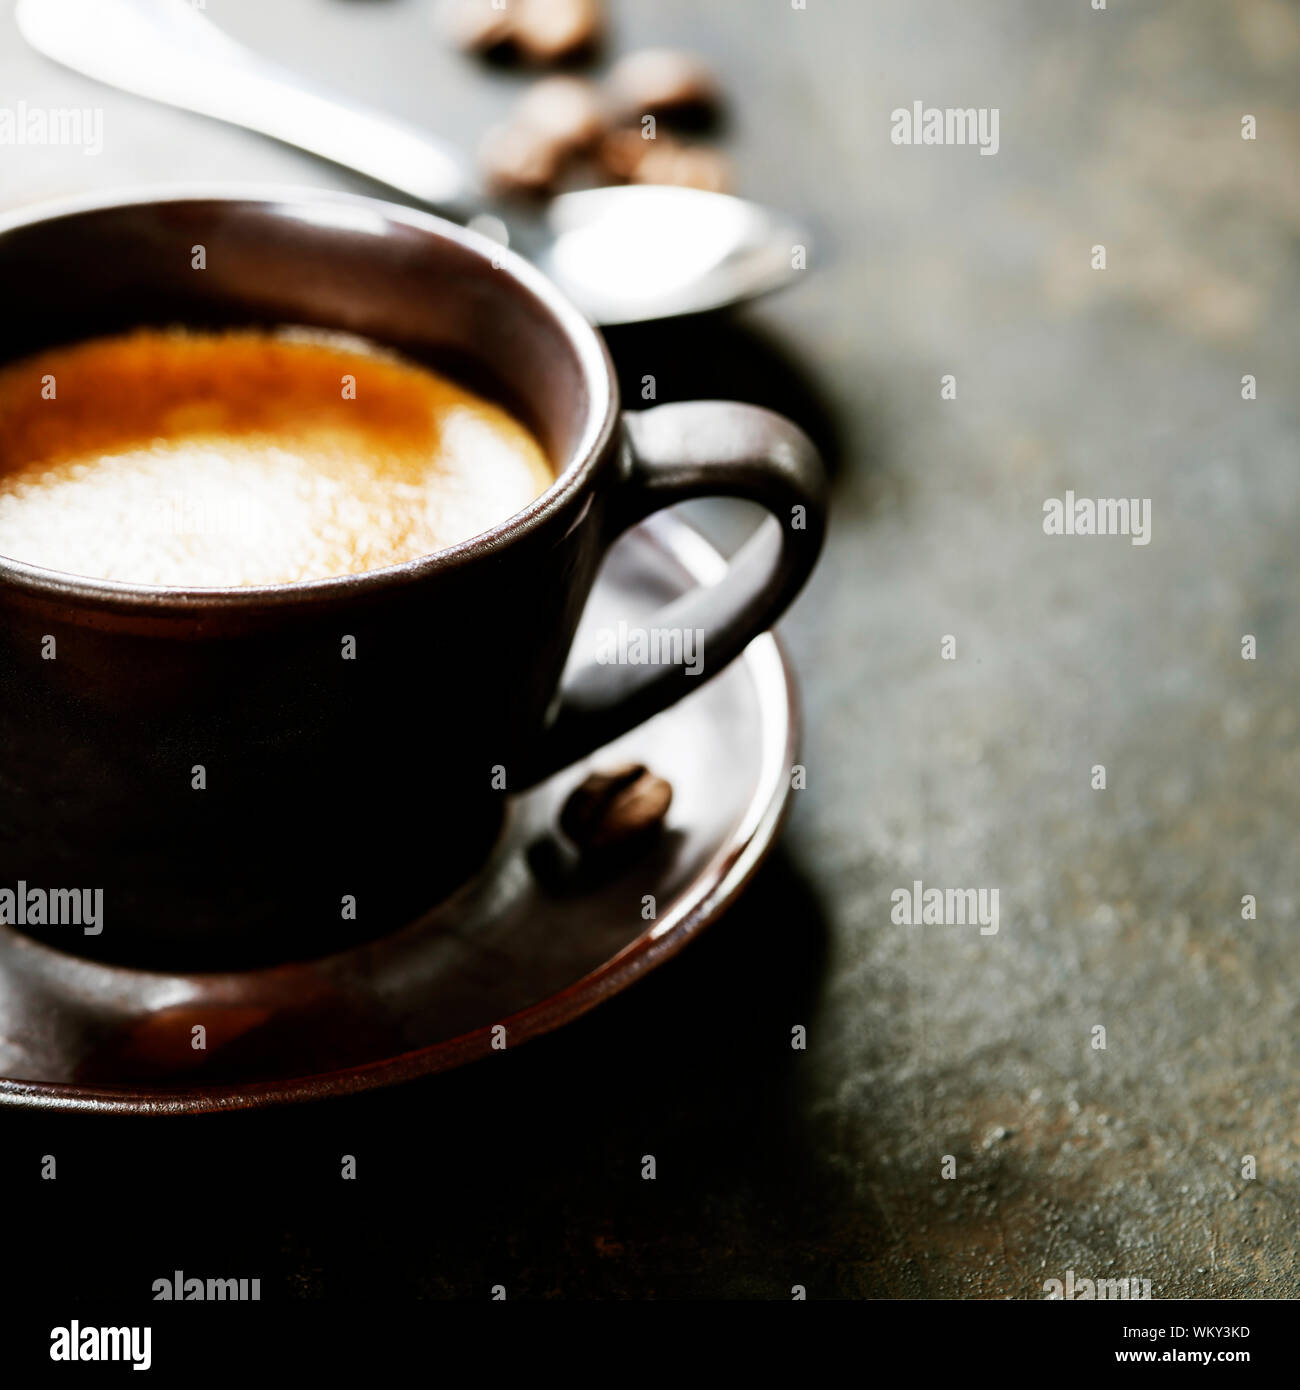 https://c8.alamy.com/comp/WKY3KD/coffee-espresso-cup-of-coffee-WKY3KD.jpg